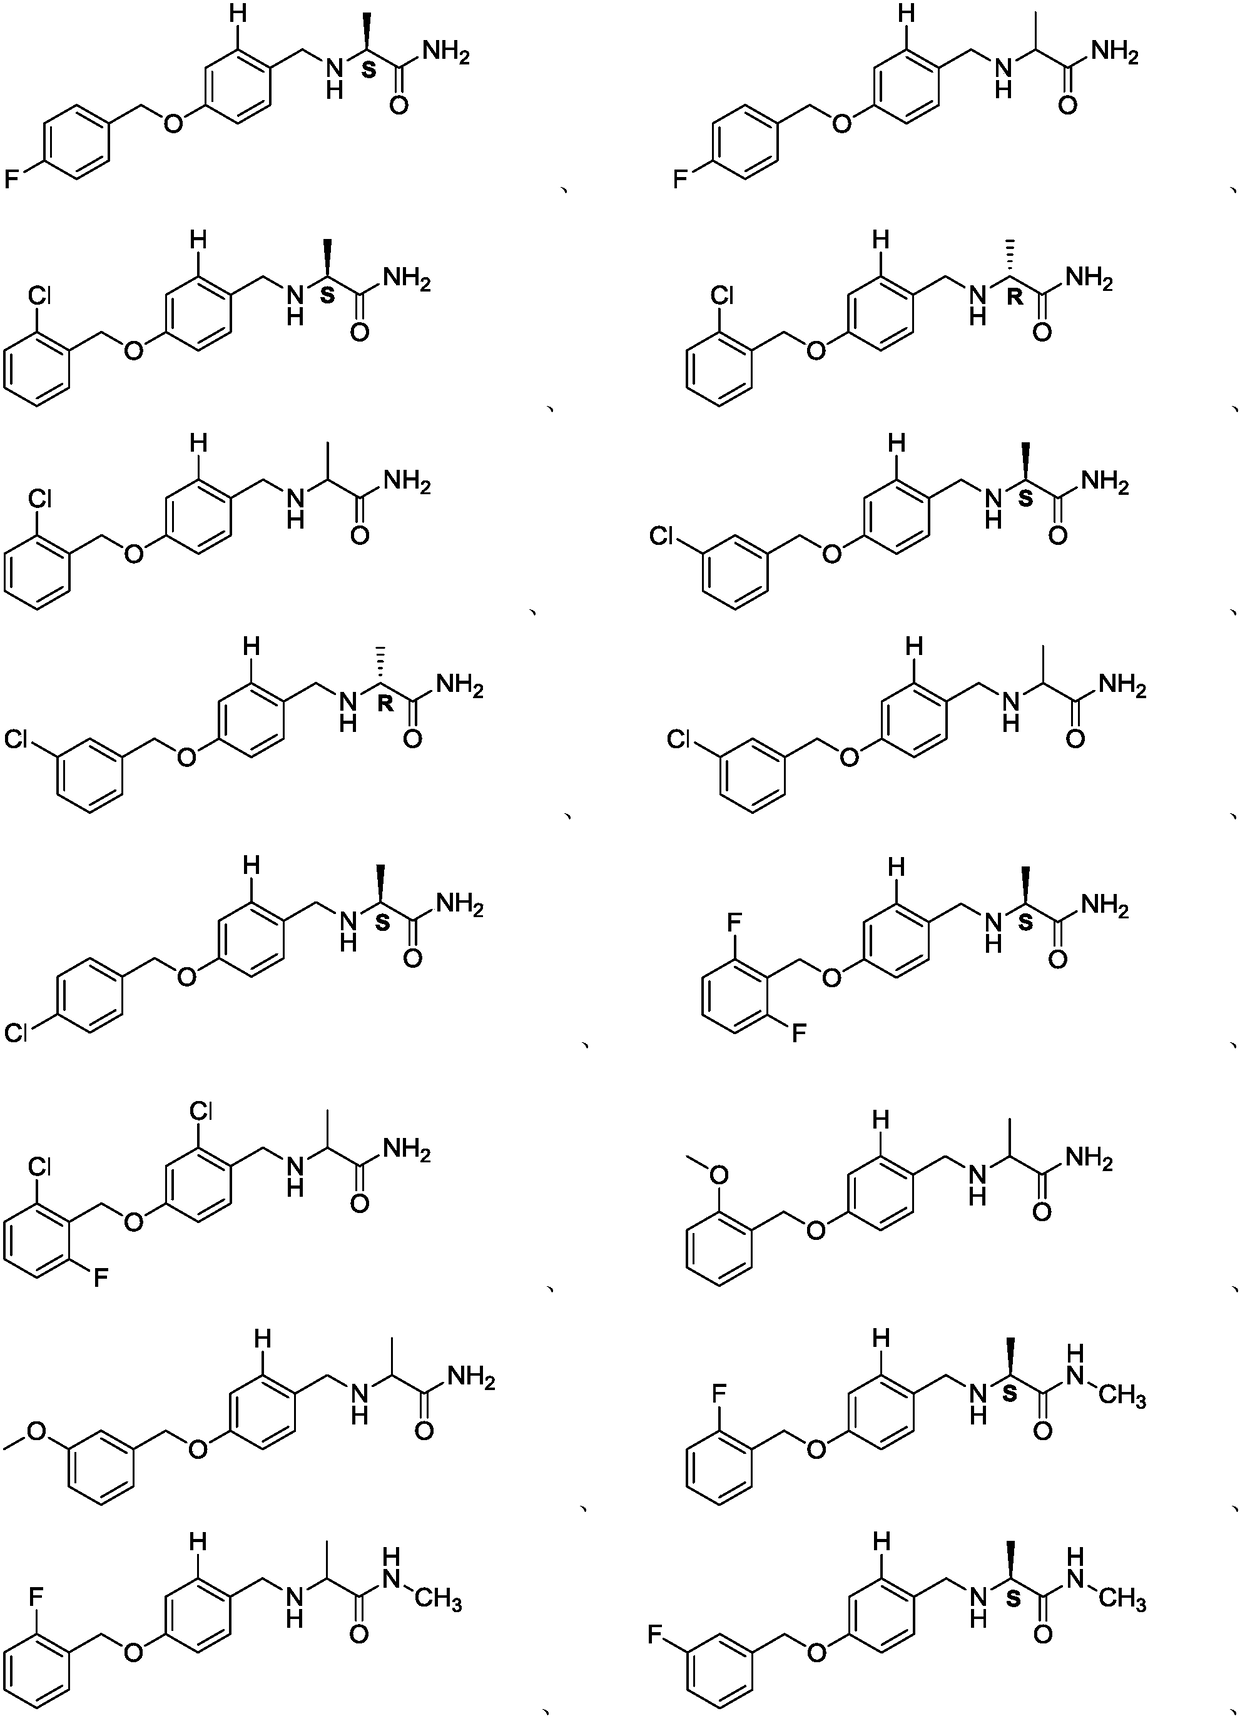 Alpha-aminoamide derivative and application thereof